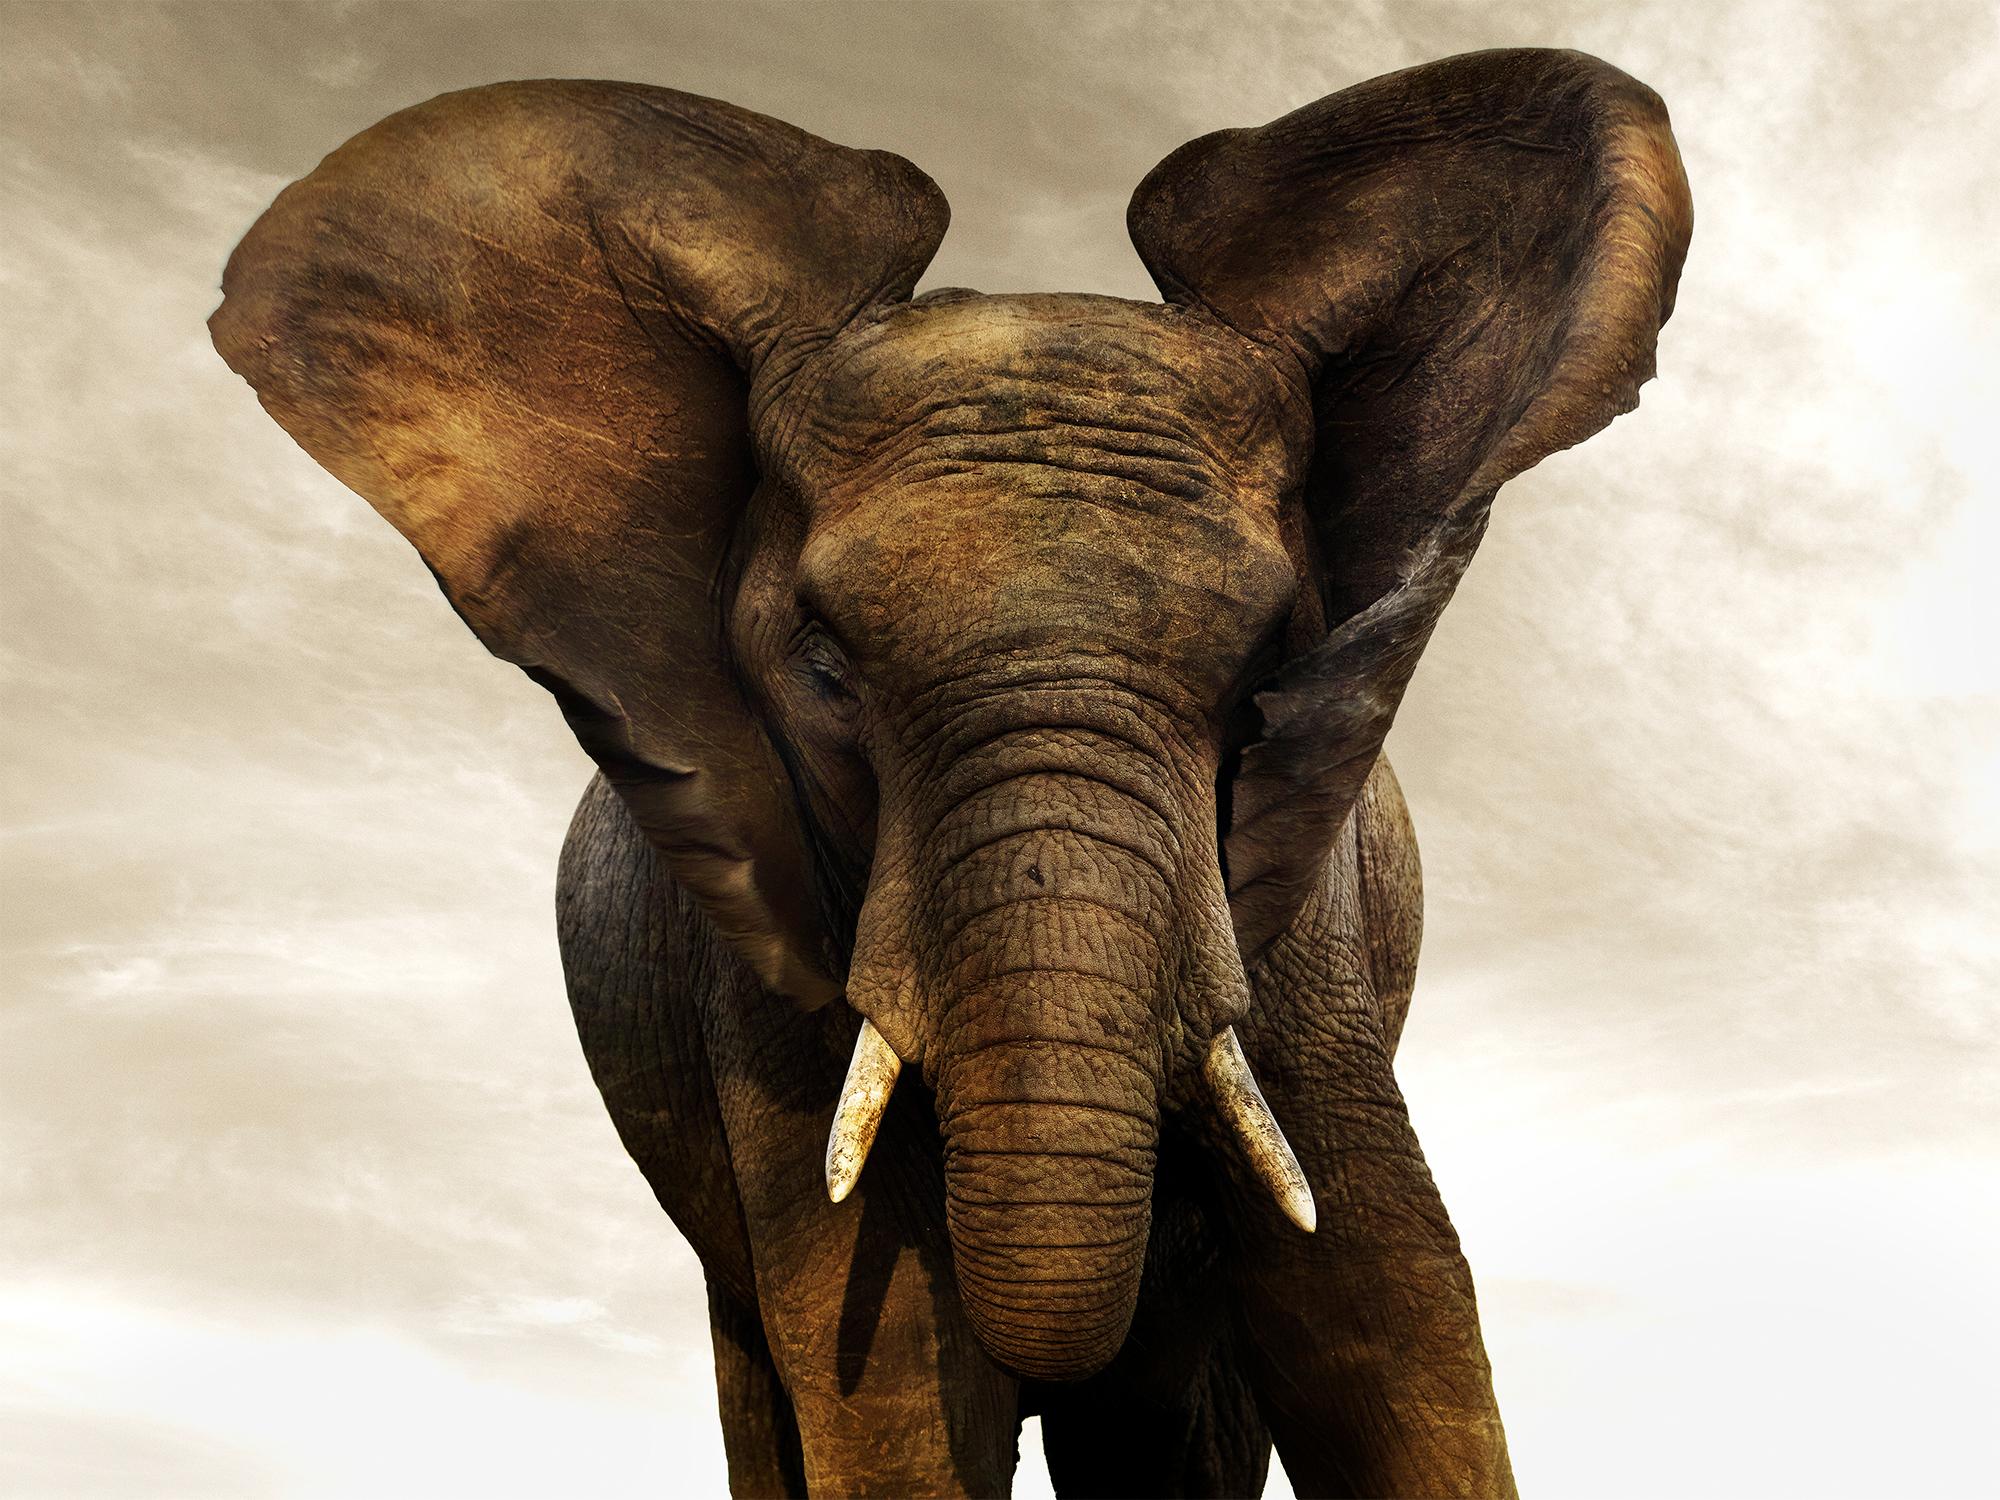 Joachim Schmeisser Portrait Photograph - Golden Giant III, animal, wildlife, color photography, elephant